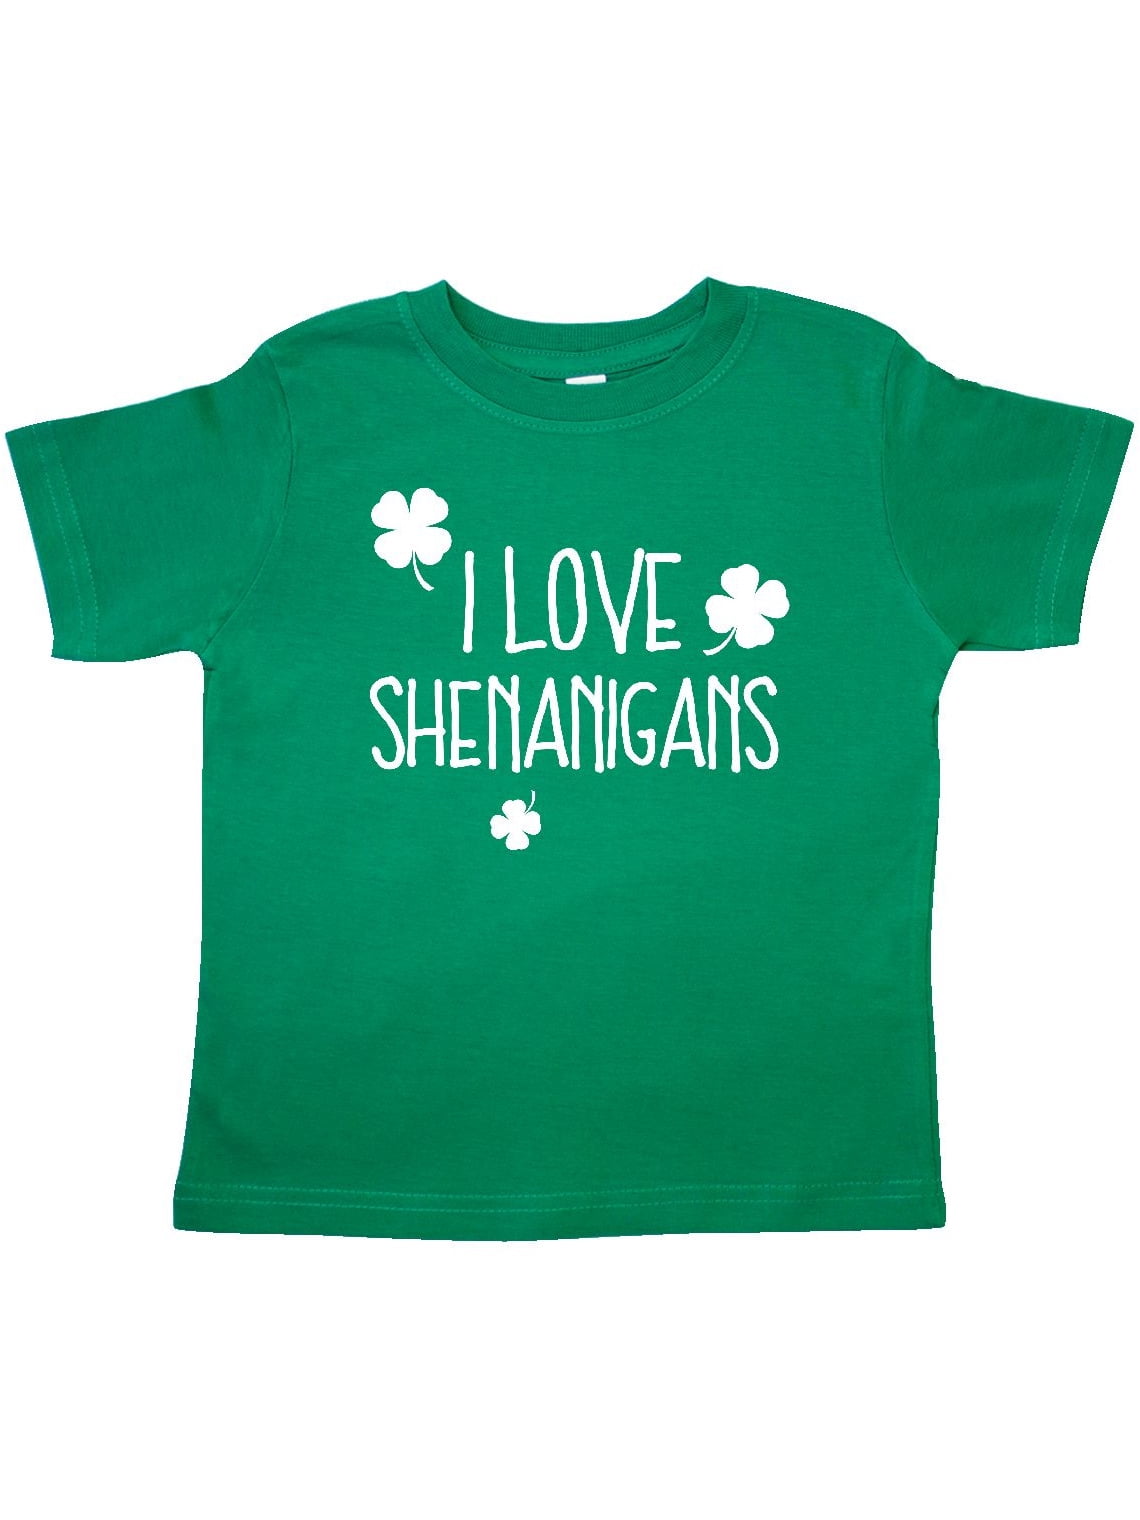 I Love Shenanigans Toddler T-Shirt - Walmart.com - Walmart.com